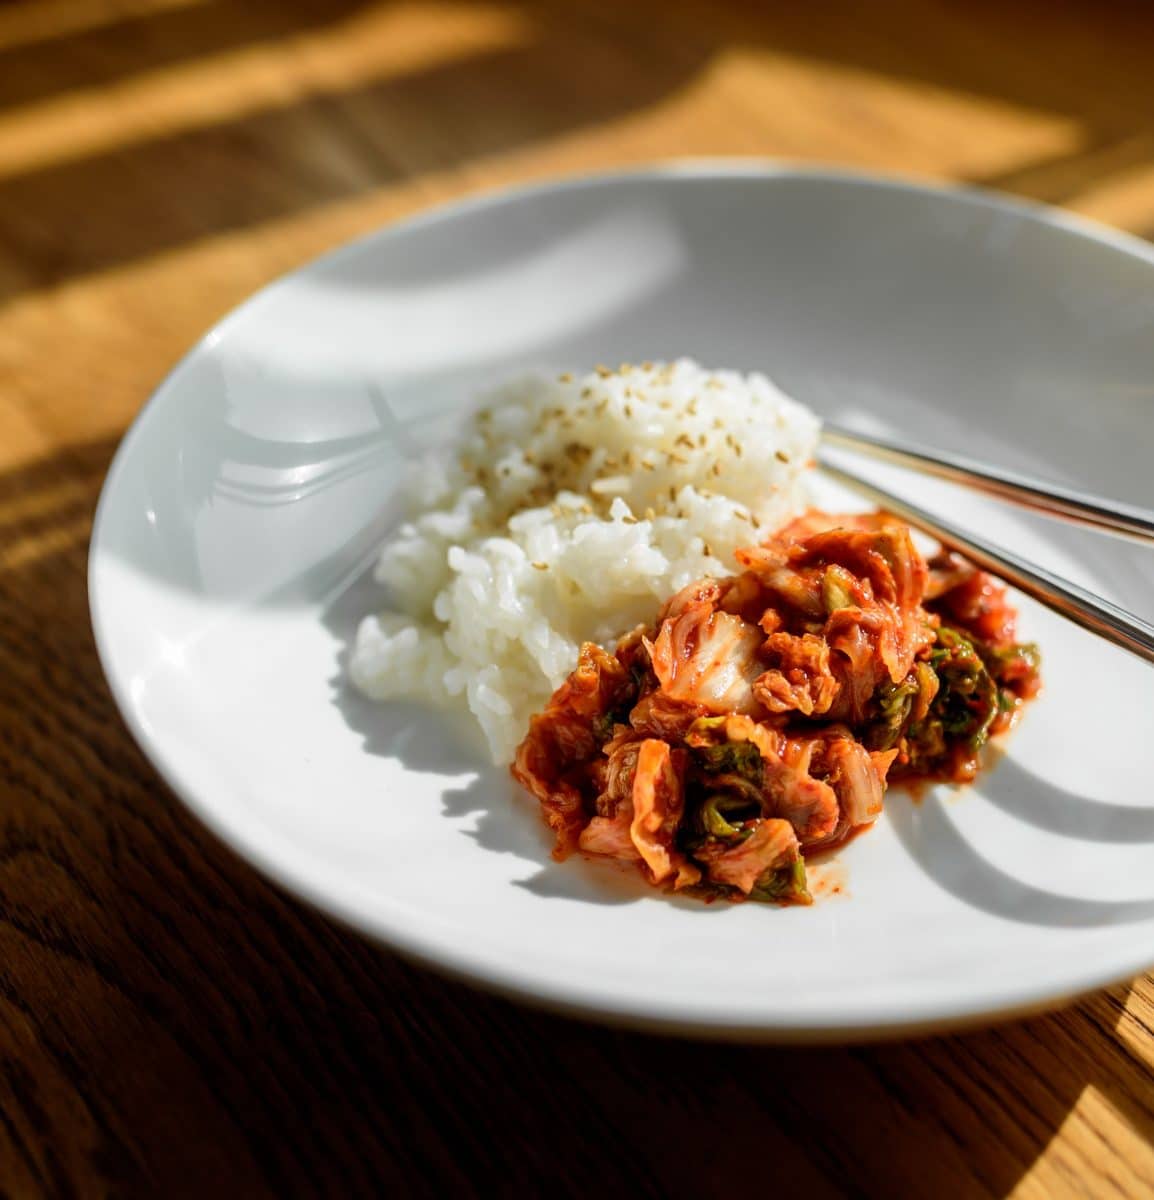 Patrice Cunningham's Tae-Gu Kimchi with rice